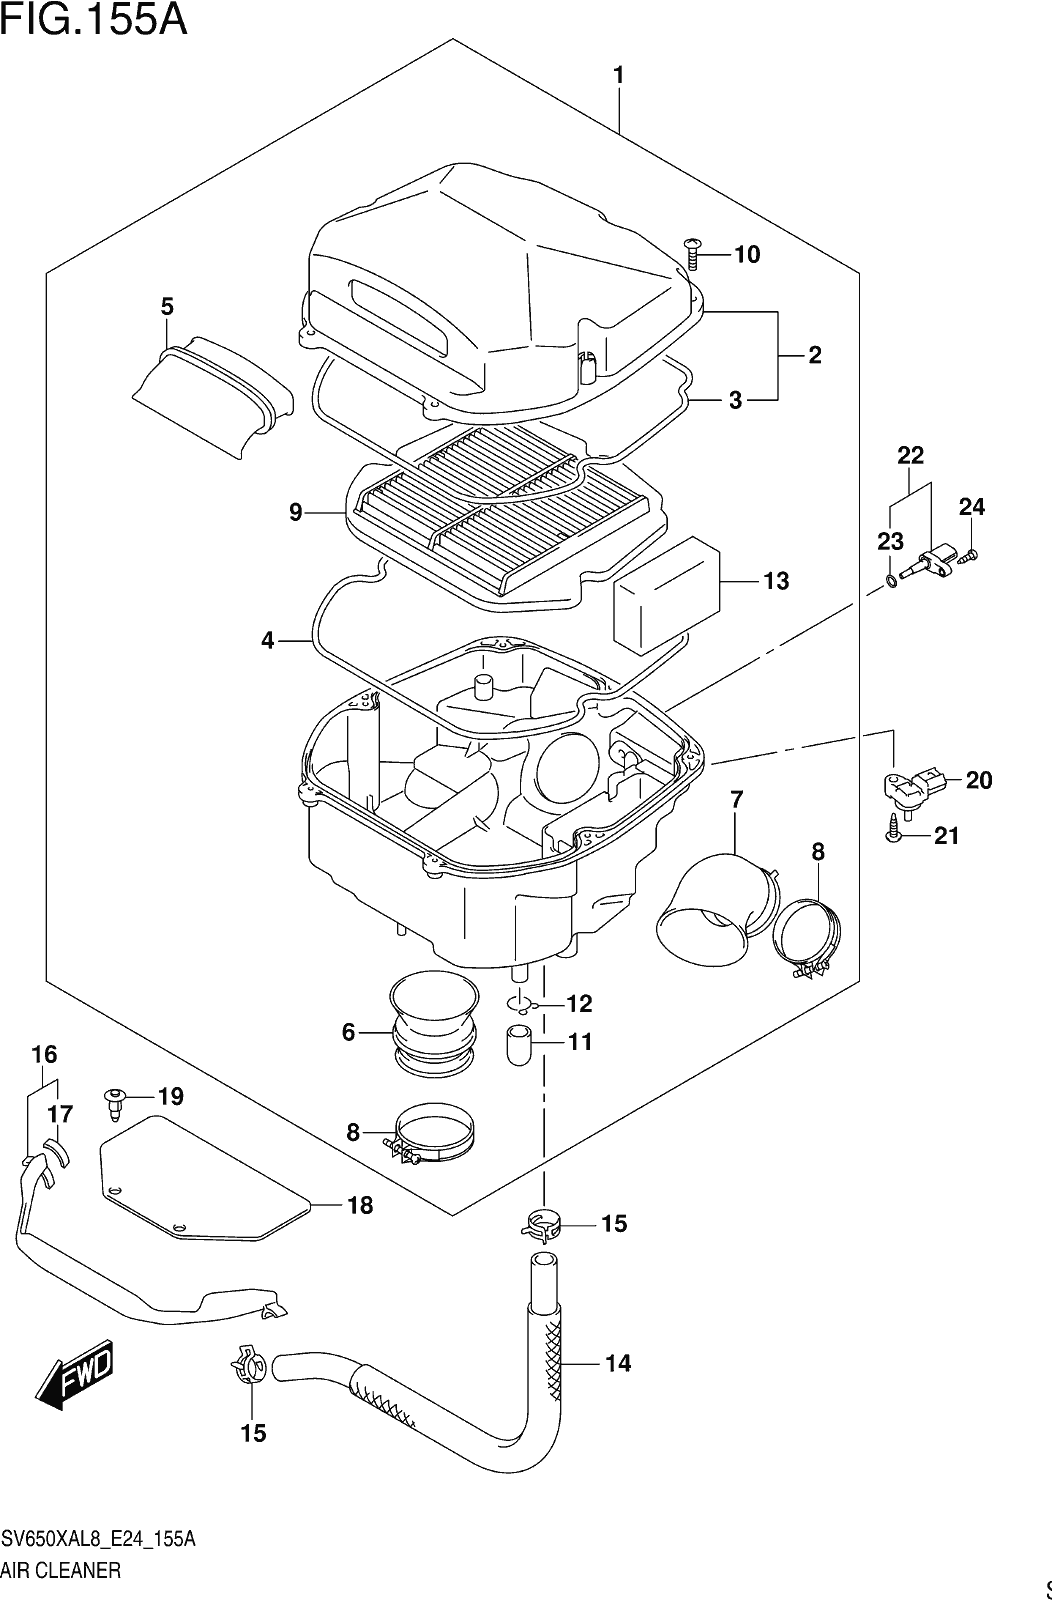 Fig.155a Air Cleaner